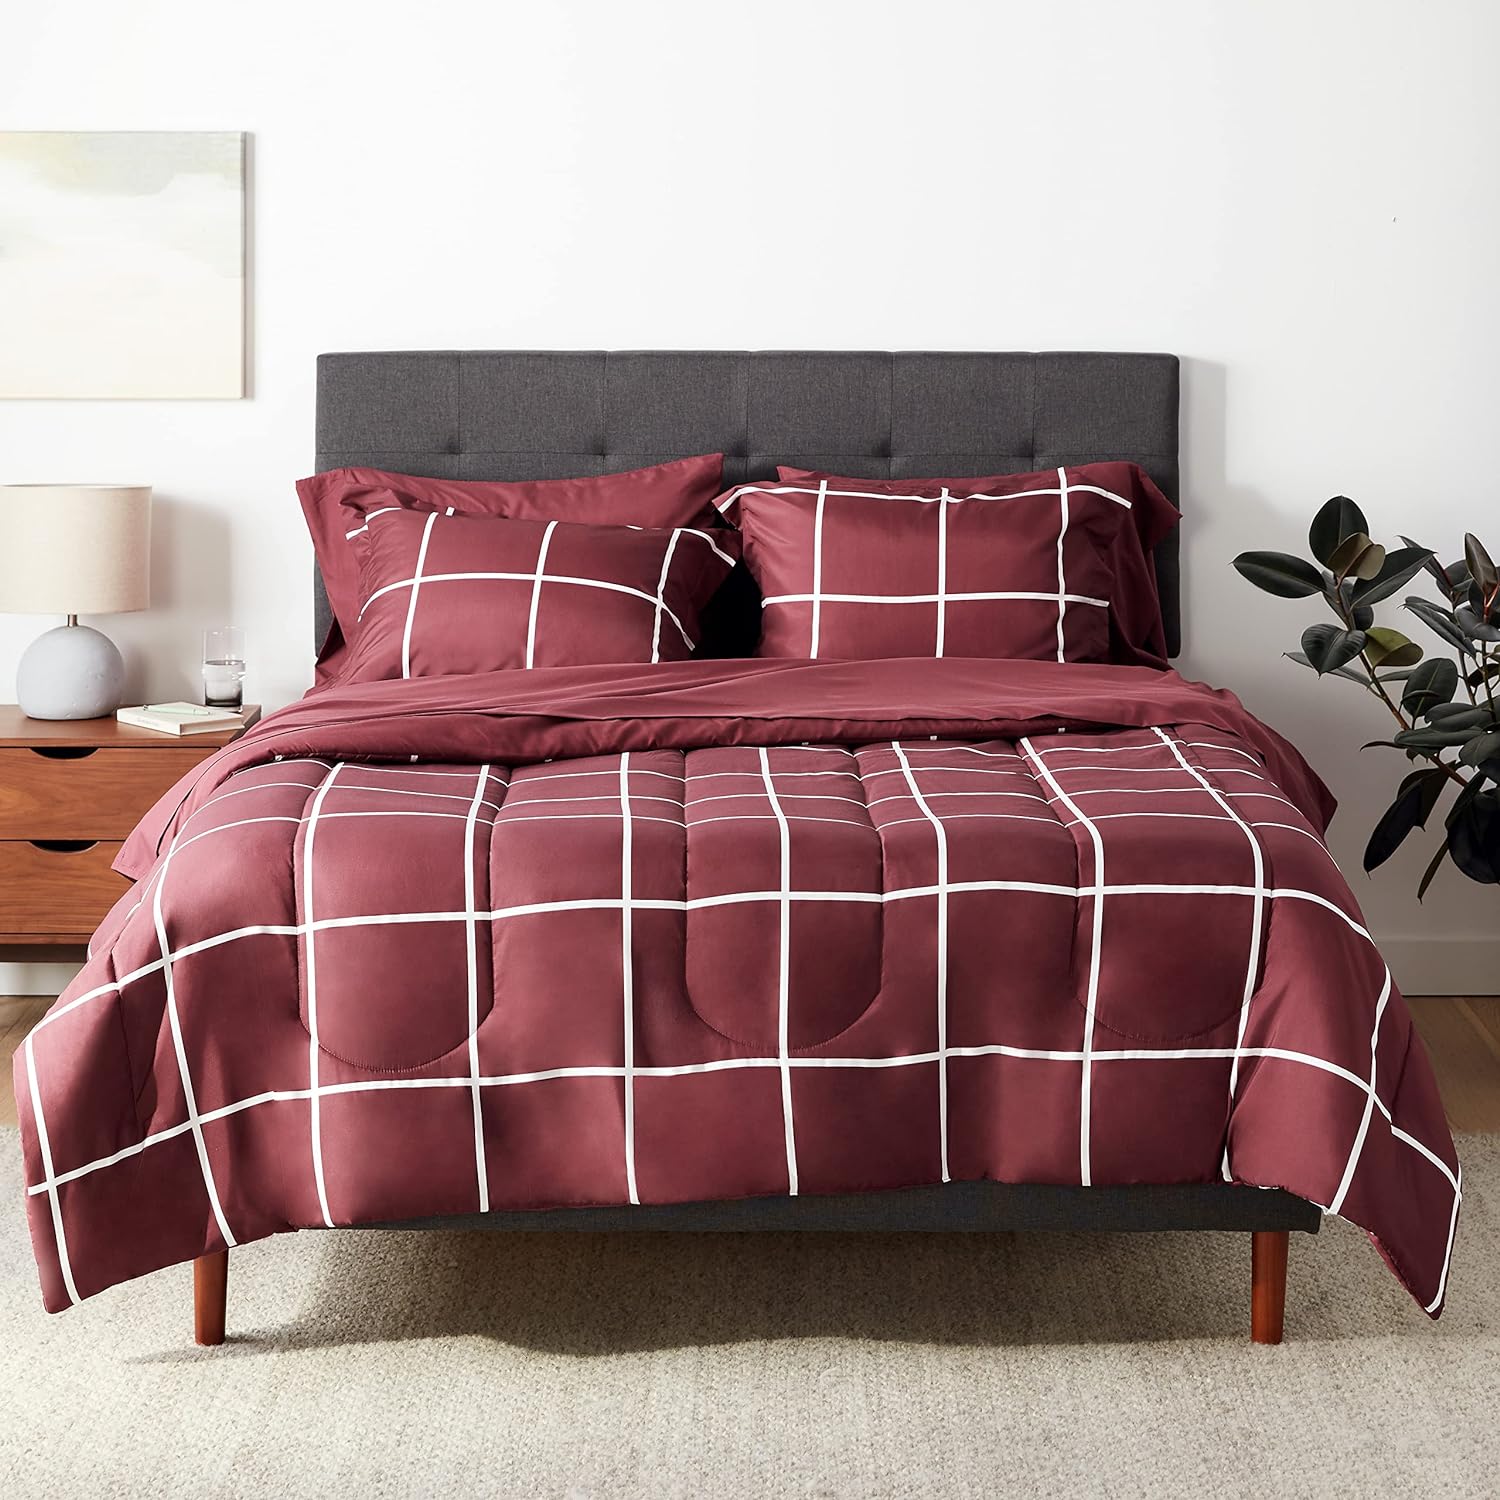 Amazon Basics Lightweight Soft Microfiber 7 Piece Bed-in-a-Bag Comforter Bedding Set, Full/Queen, Burgundy Simple Plaid